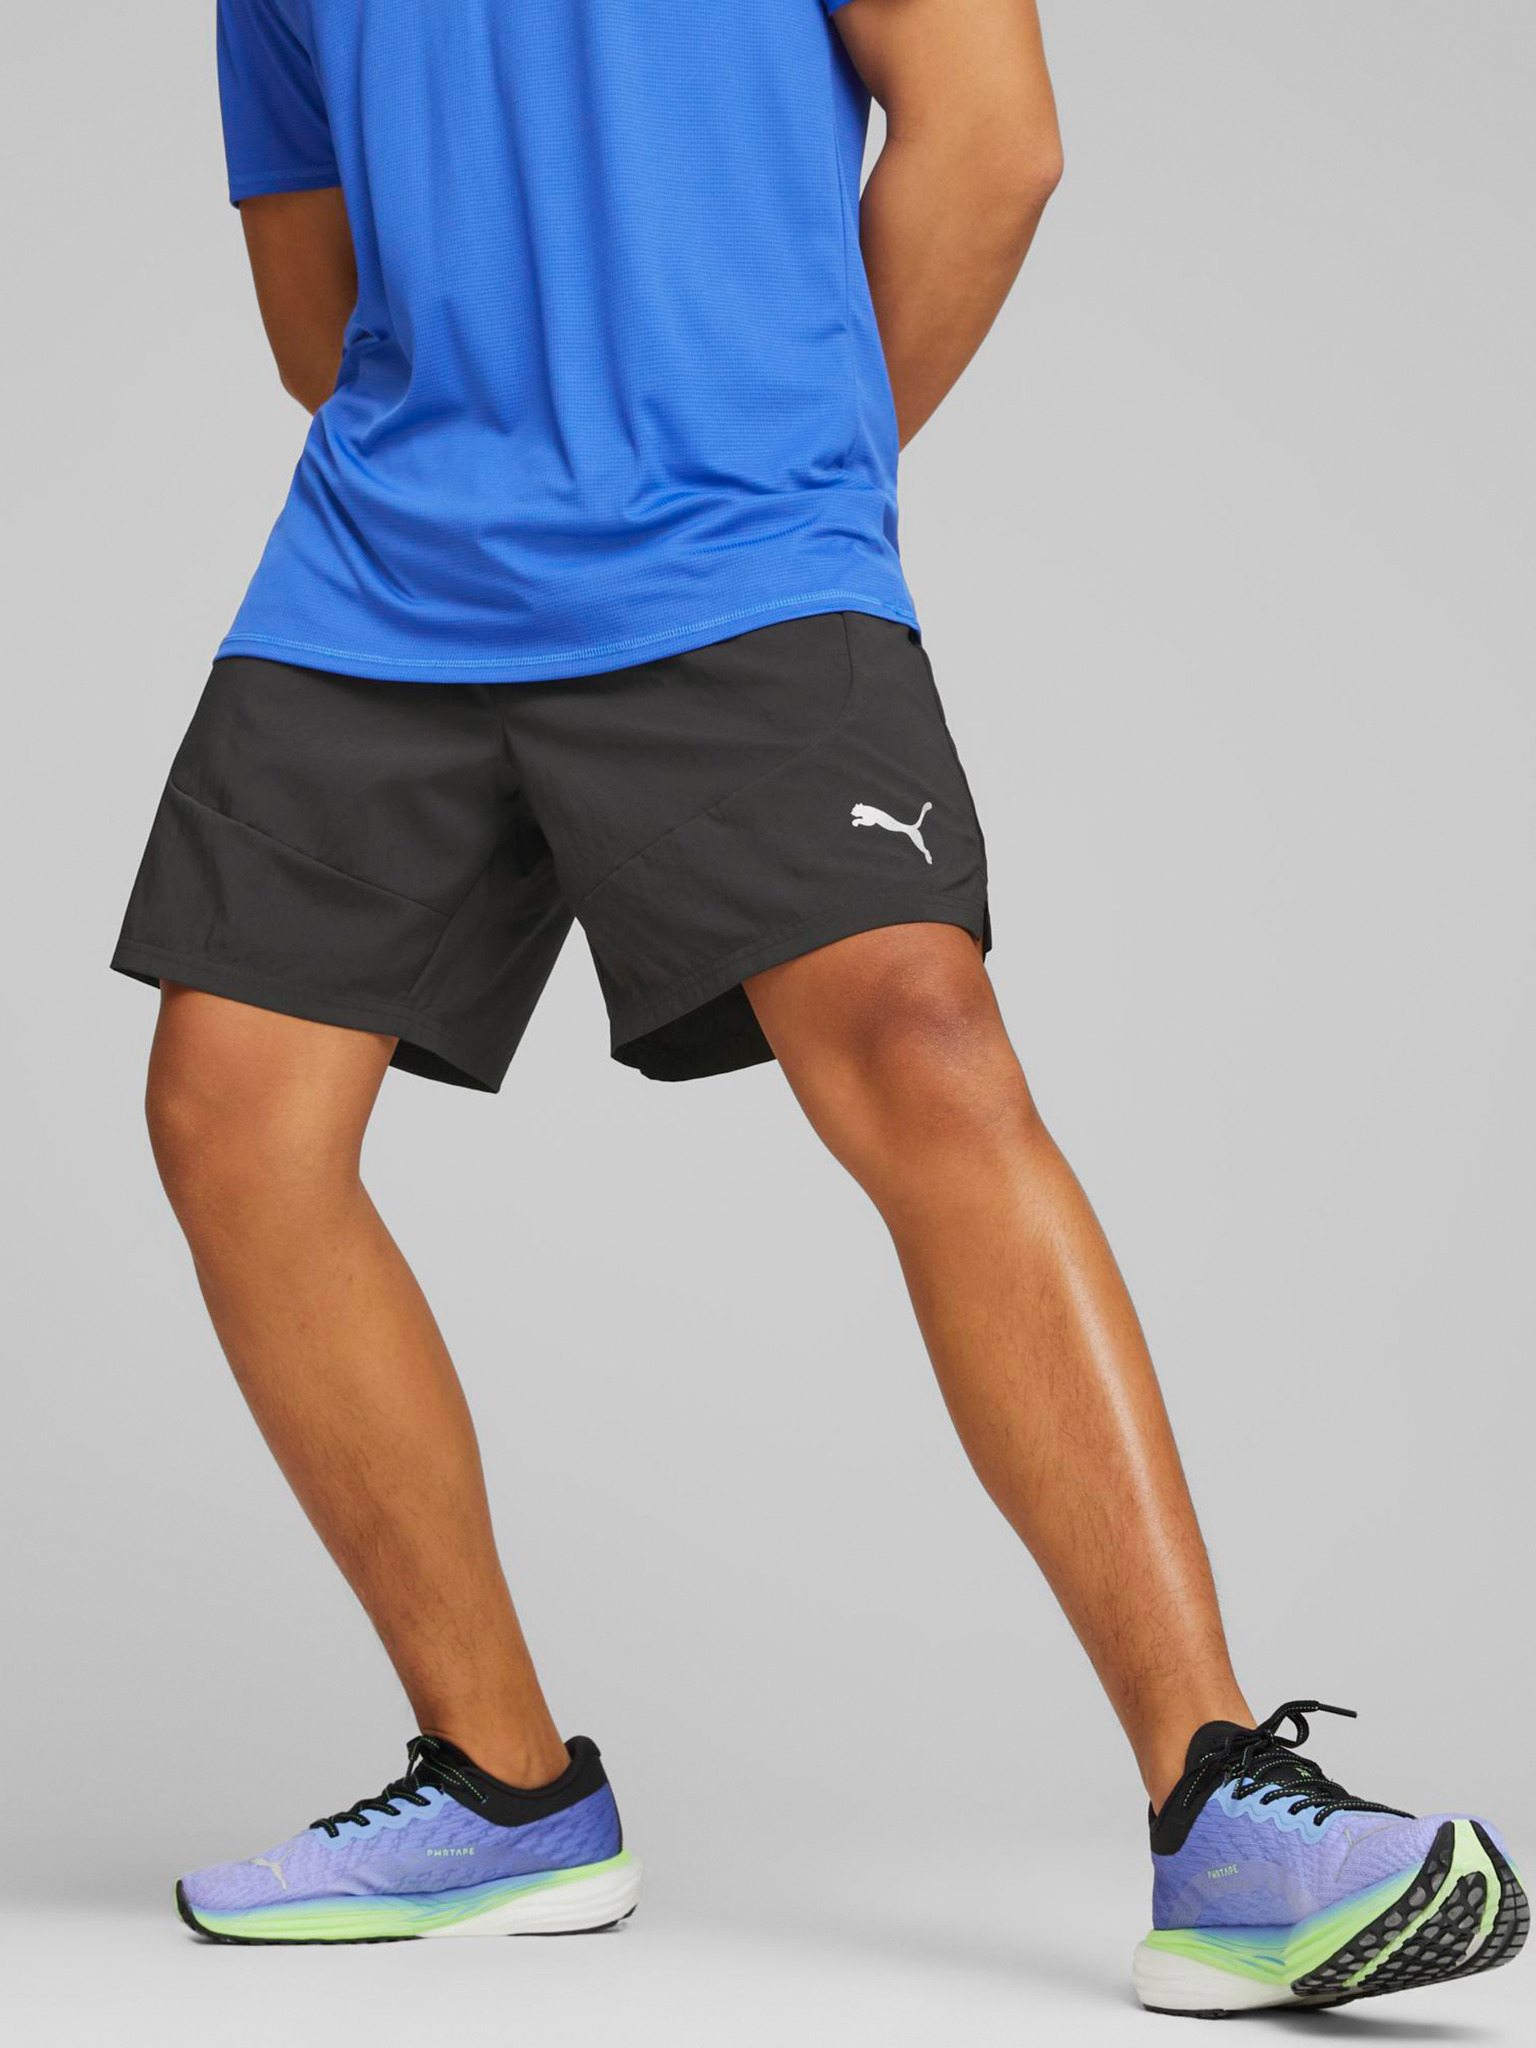 Men's Football Basketball Shorts Gym Sports Workout Bottom Running Short  Pants | eBay